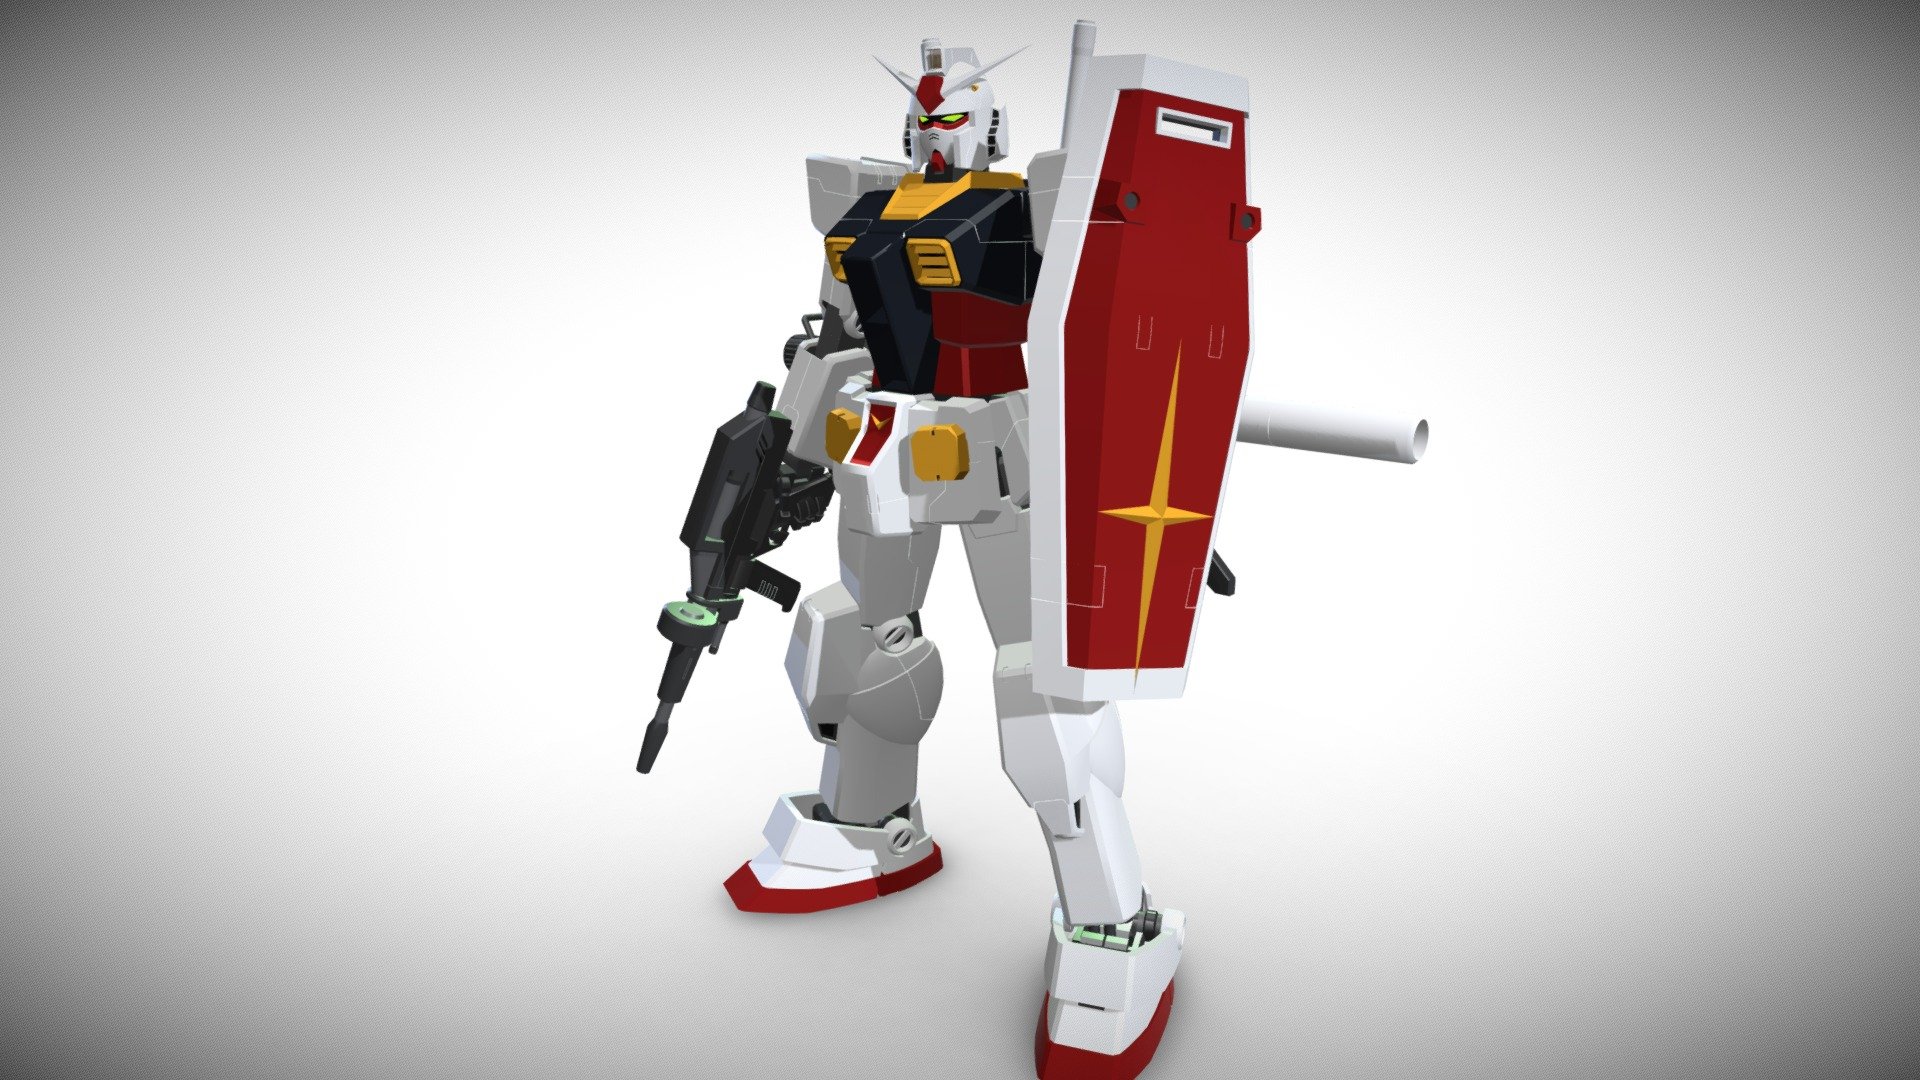 Gundam Rx D model by krit yamsaso กฤษณ แยมสระโส krit yamsaso f Sketchfab